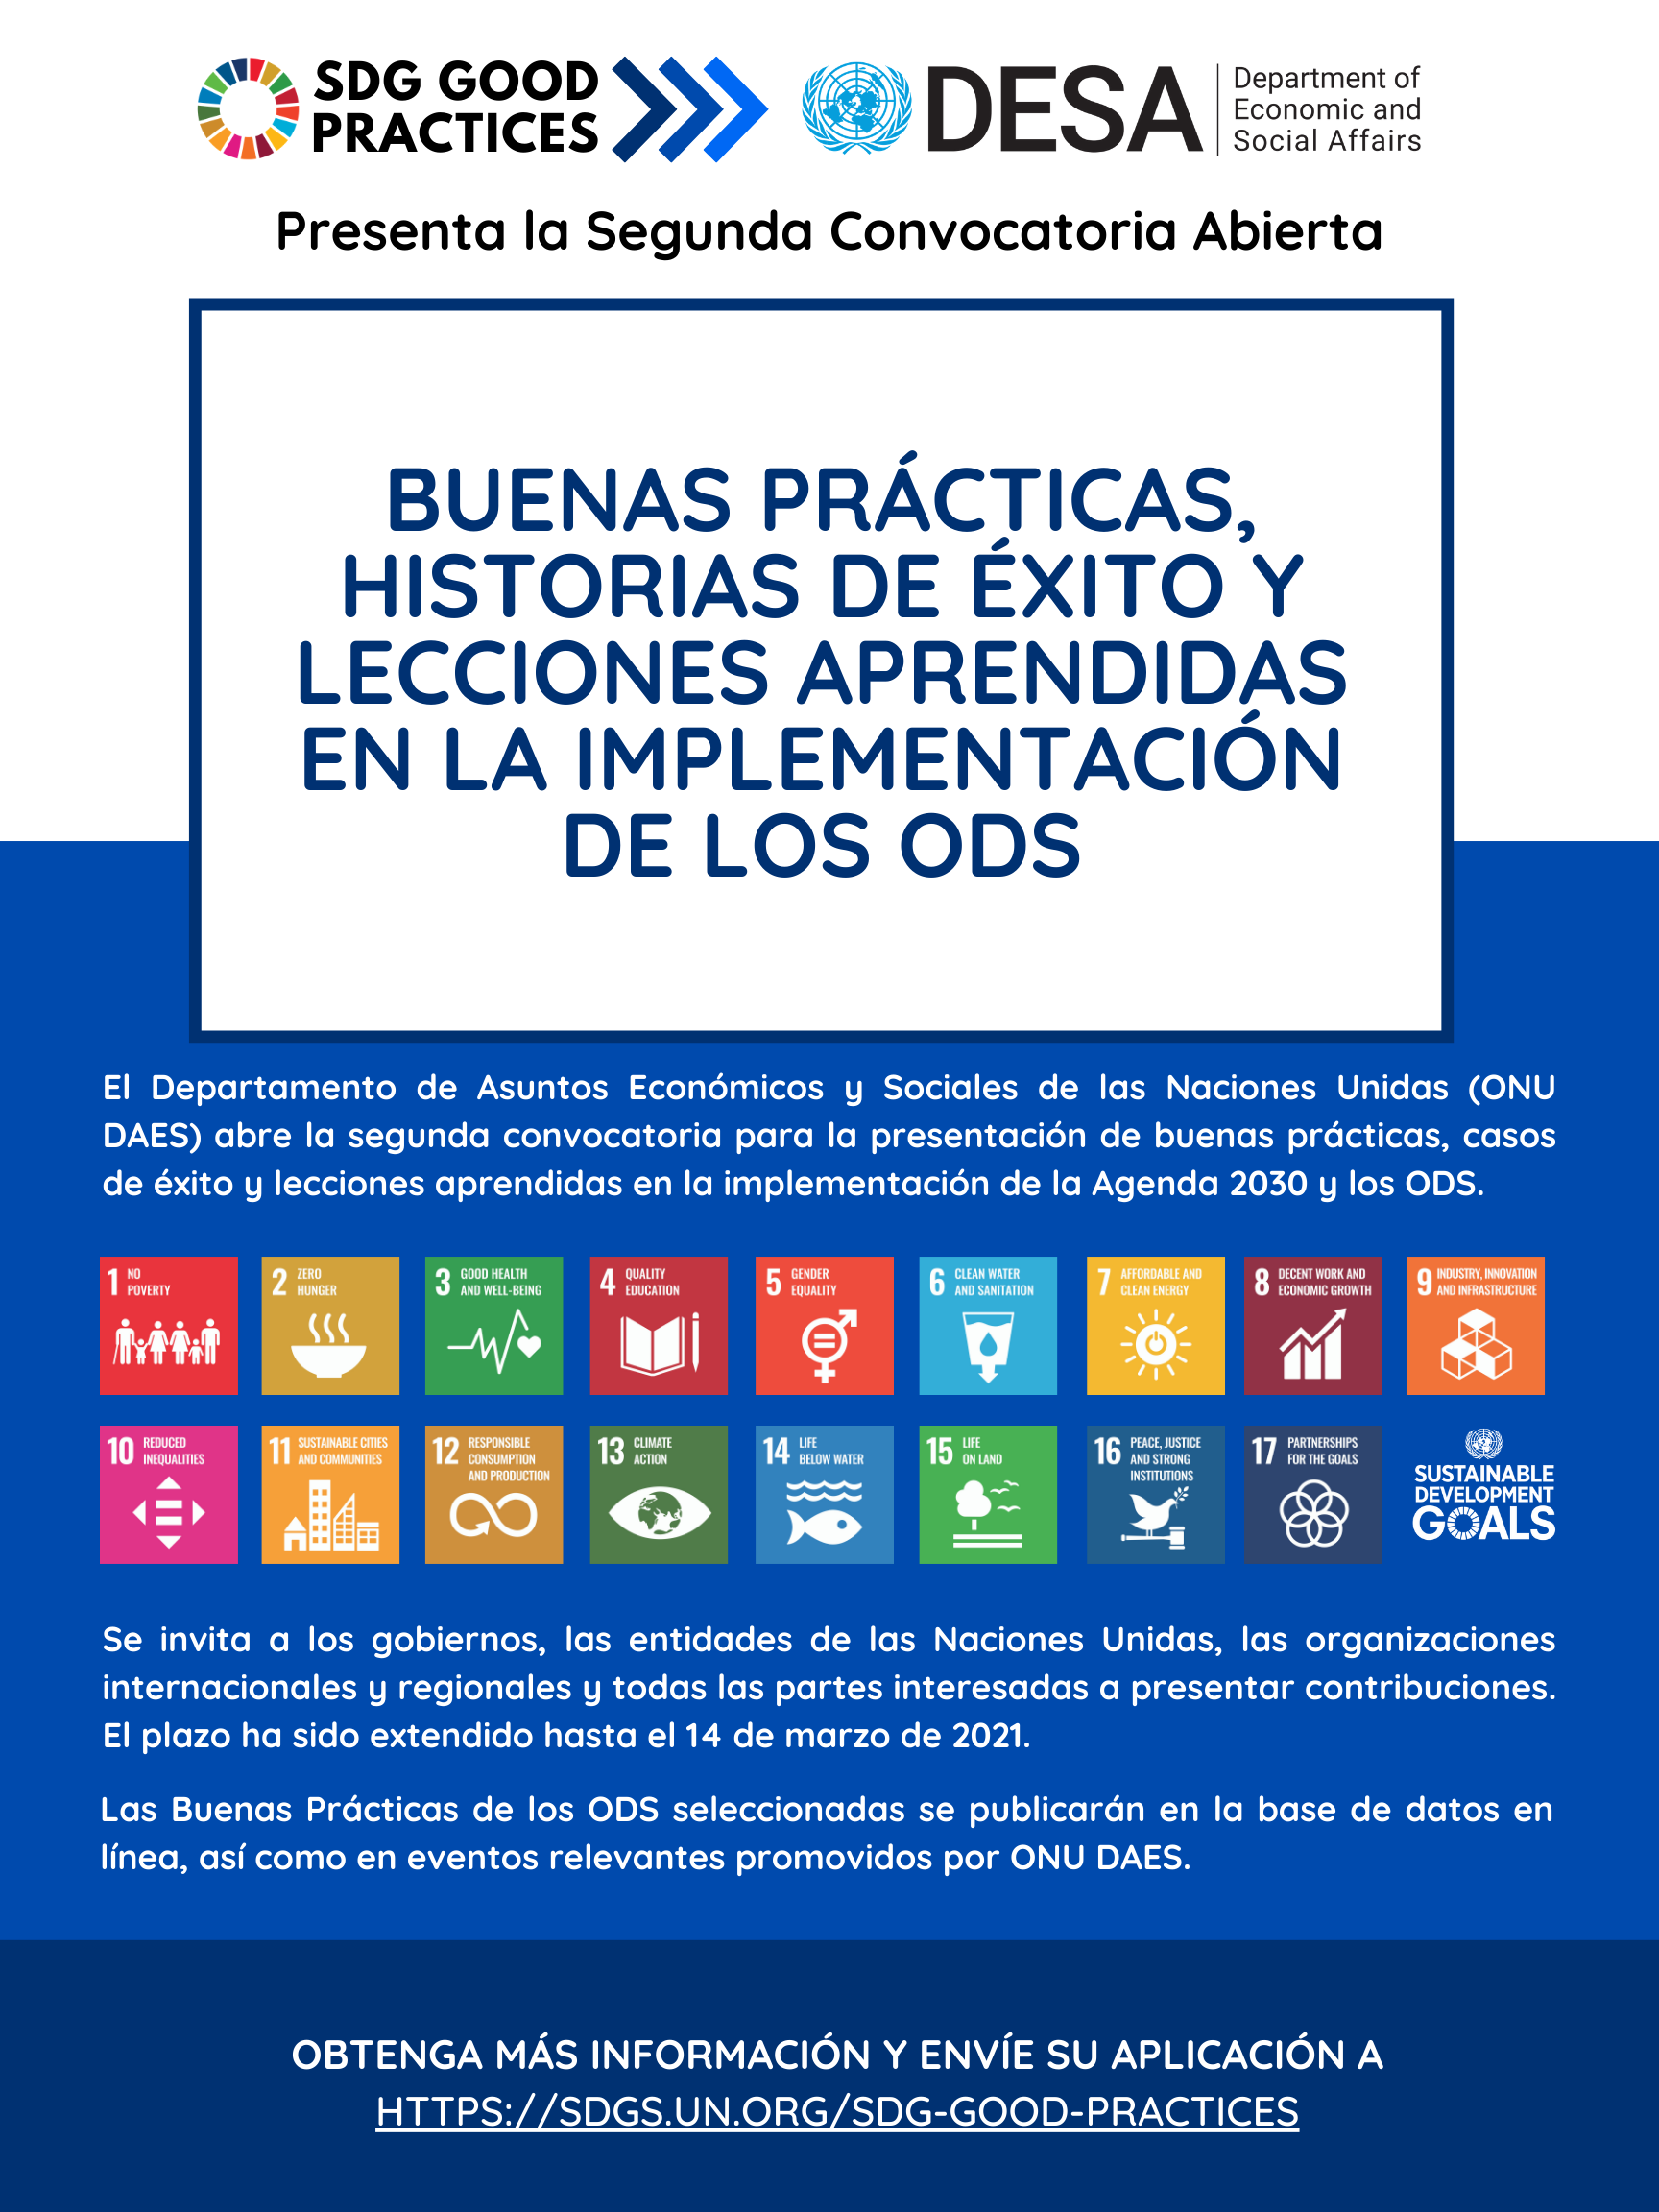 SDG Good Practices Spanish Flyer